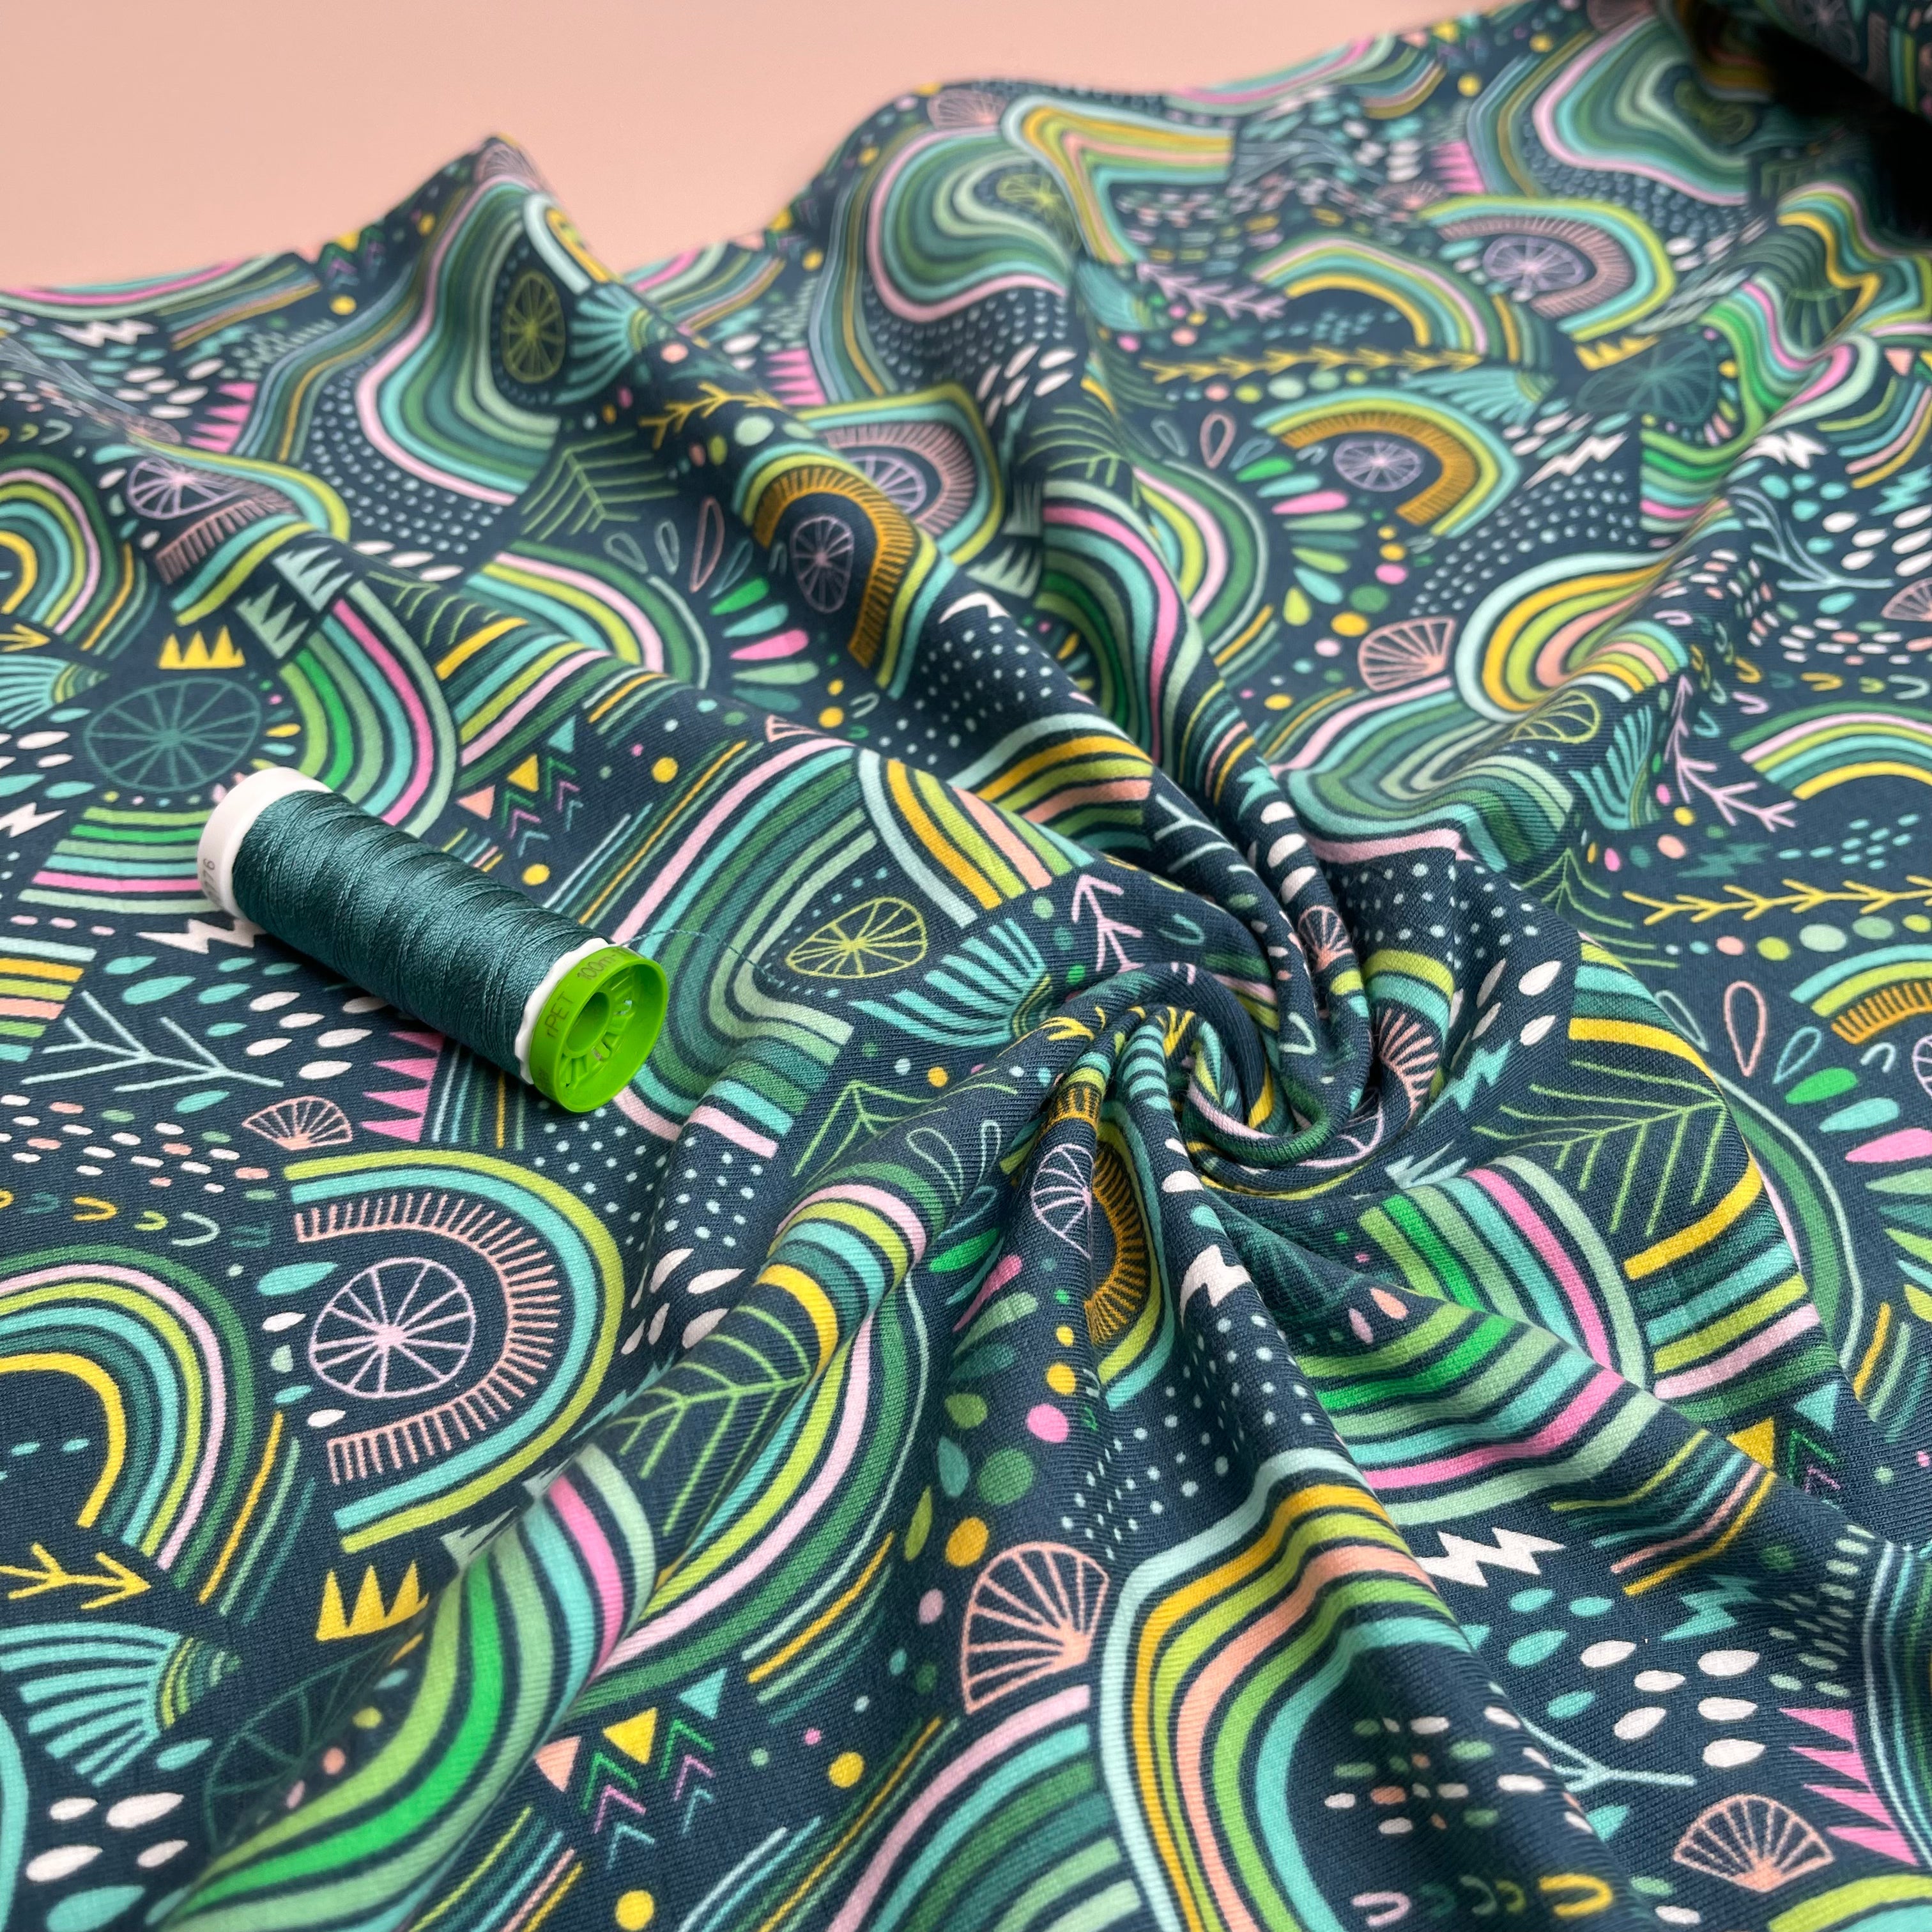 REMANT 0.92 Metre - Art Gallery Fabrics - Stormy Rainbows Cotton Jersey